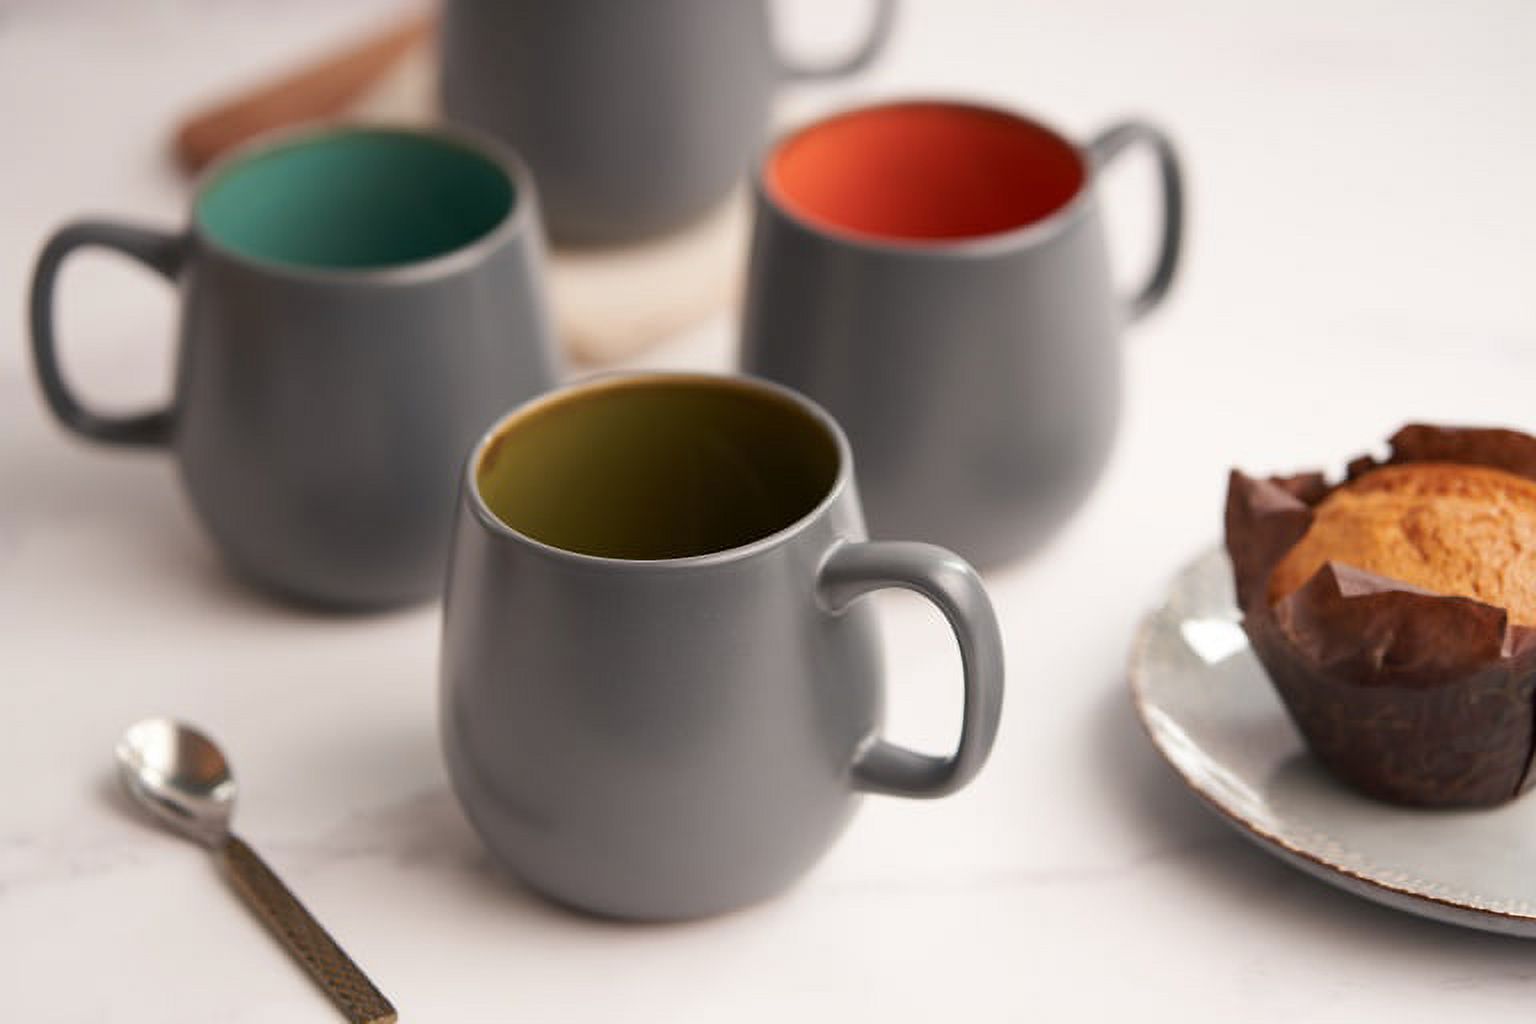 Kook Deco Large Coffee Mugs Set of 4, 21 Oz Multicolor Ceramic Mugs Drinkware - image 3 of 5